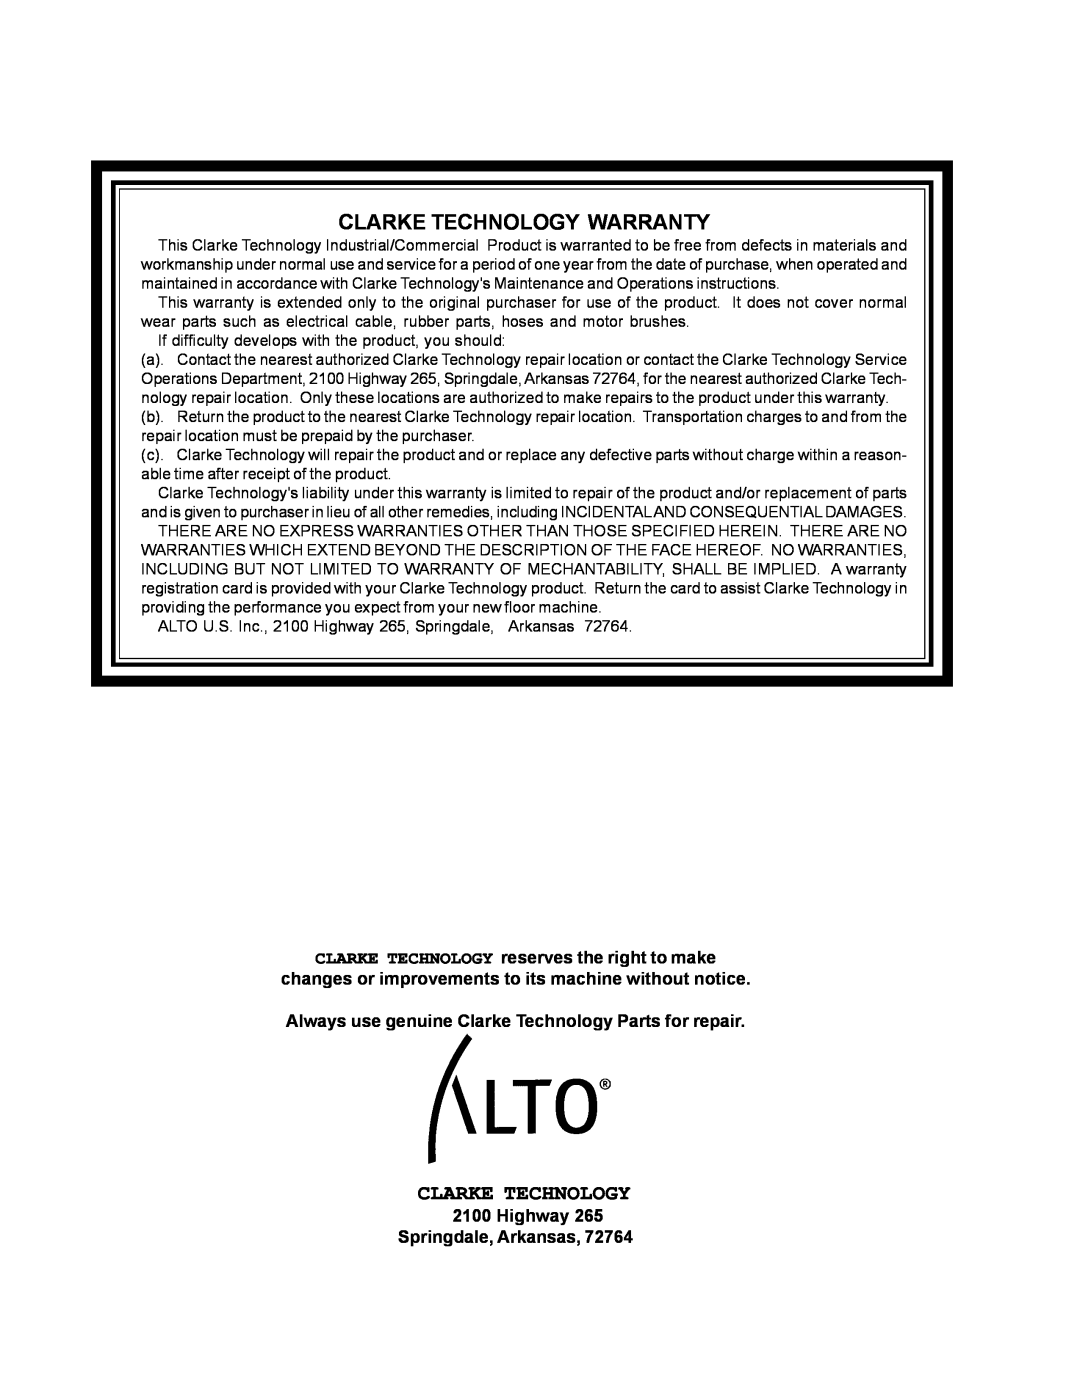 Nilfisk-ALTO 530cc manual Clarke Technology Warranty 